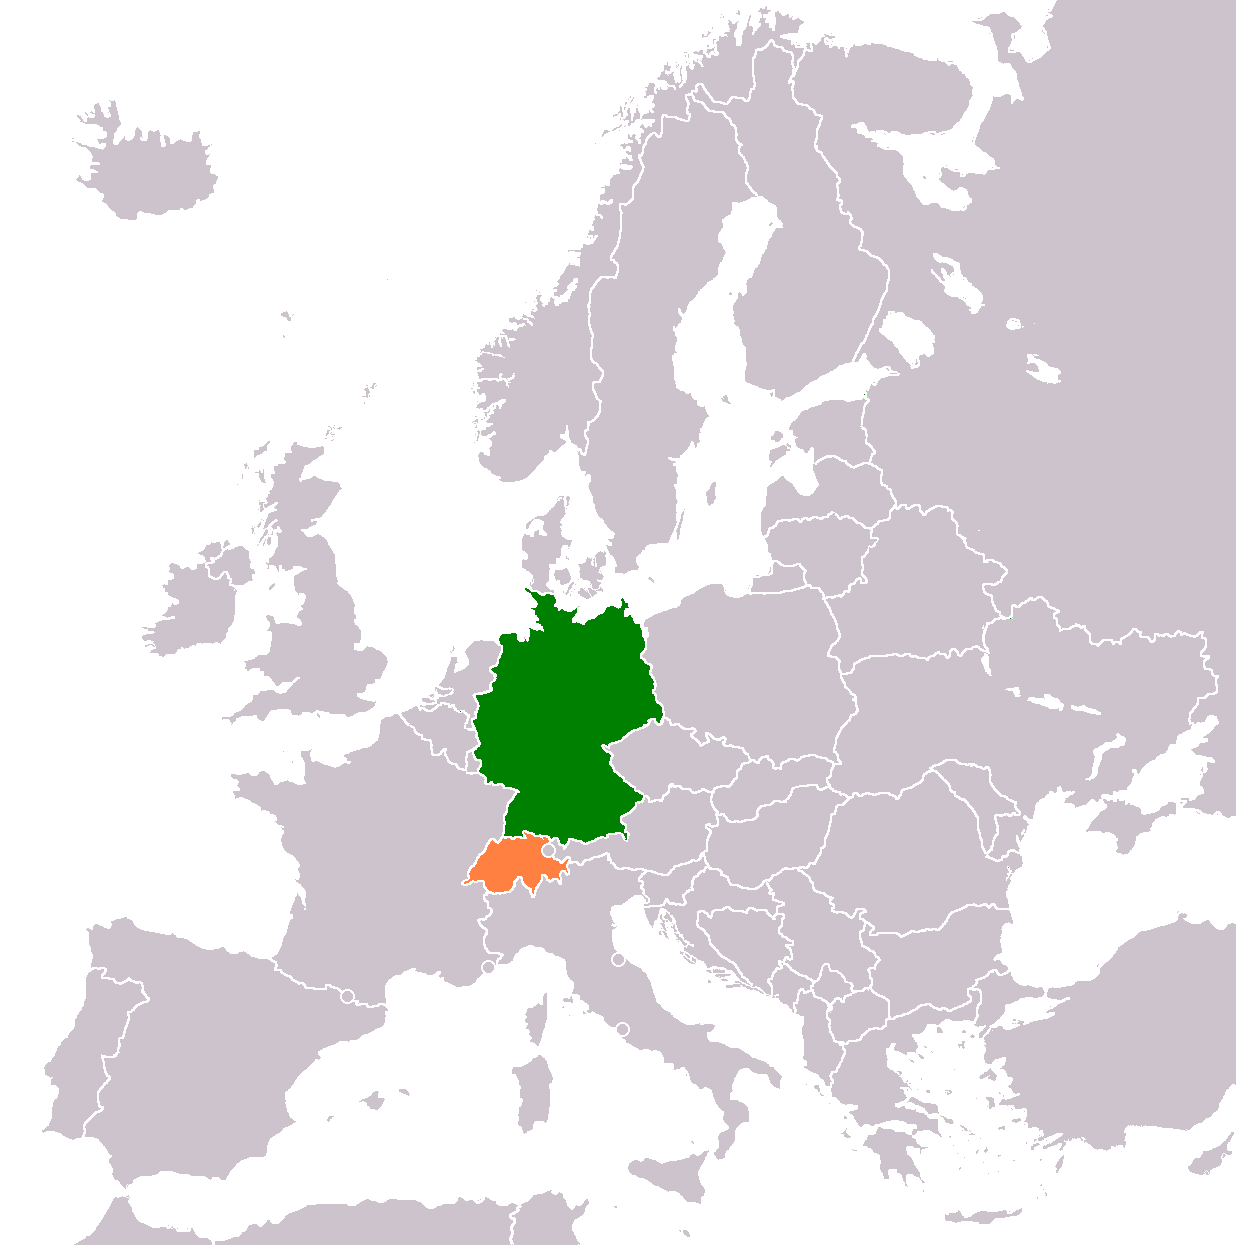 should germany and austria unite